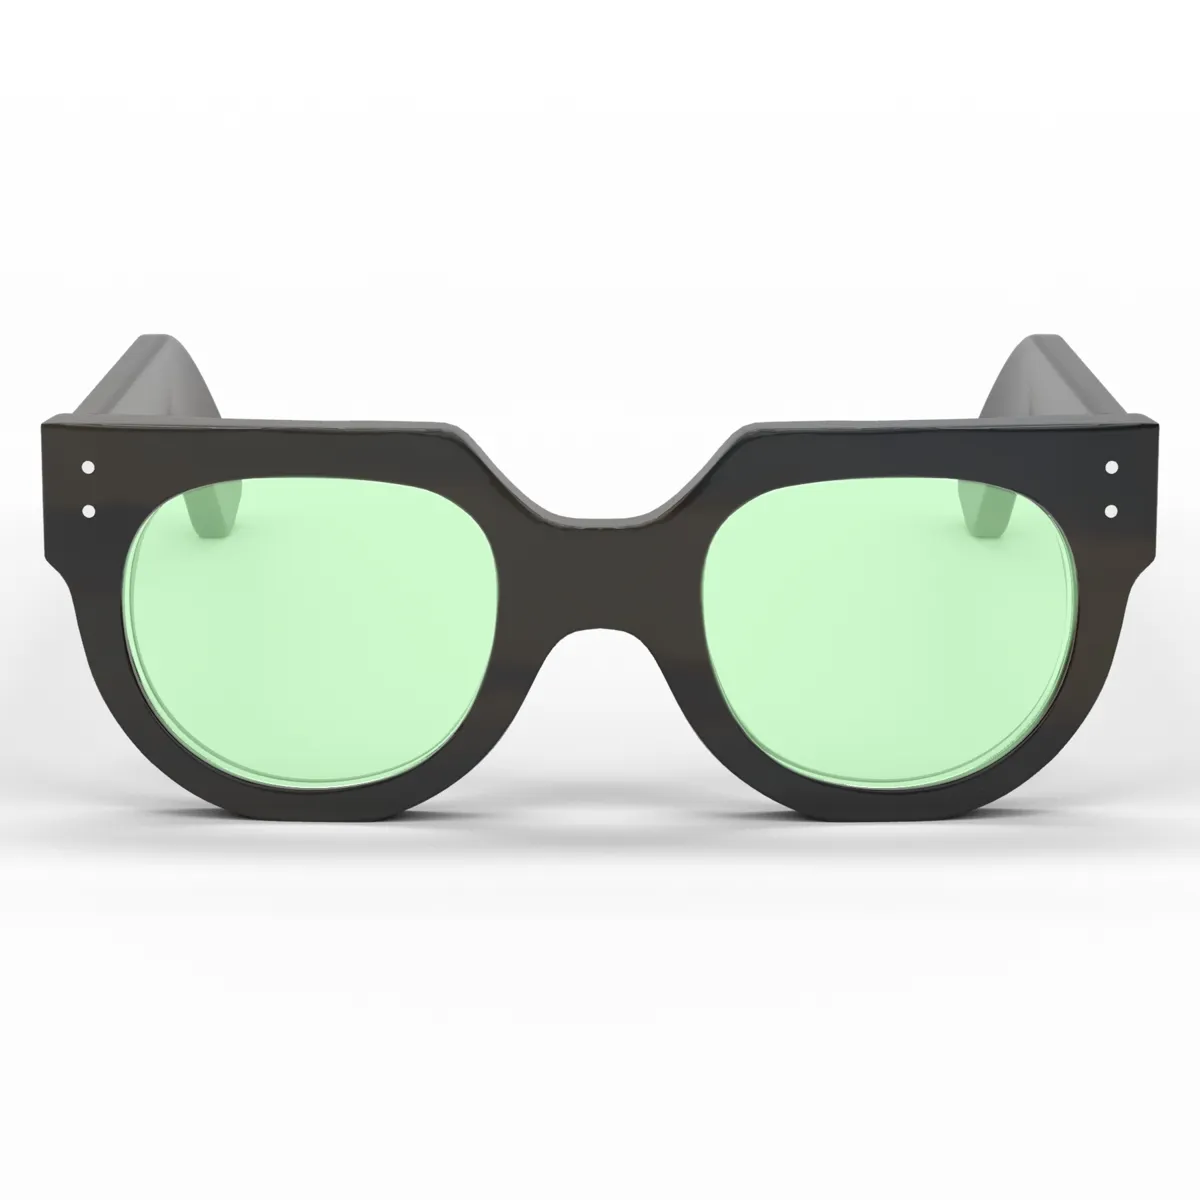 TL-W2 Rectangular sunglasses